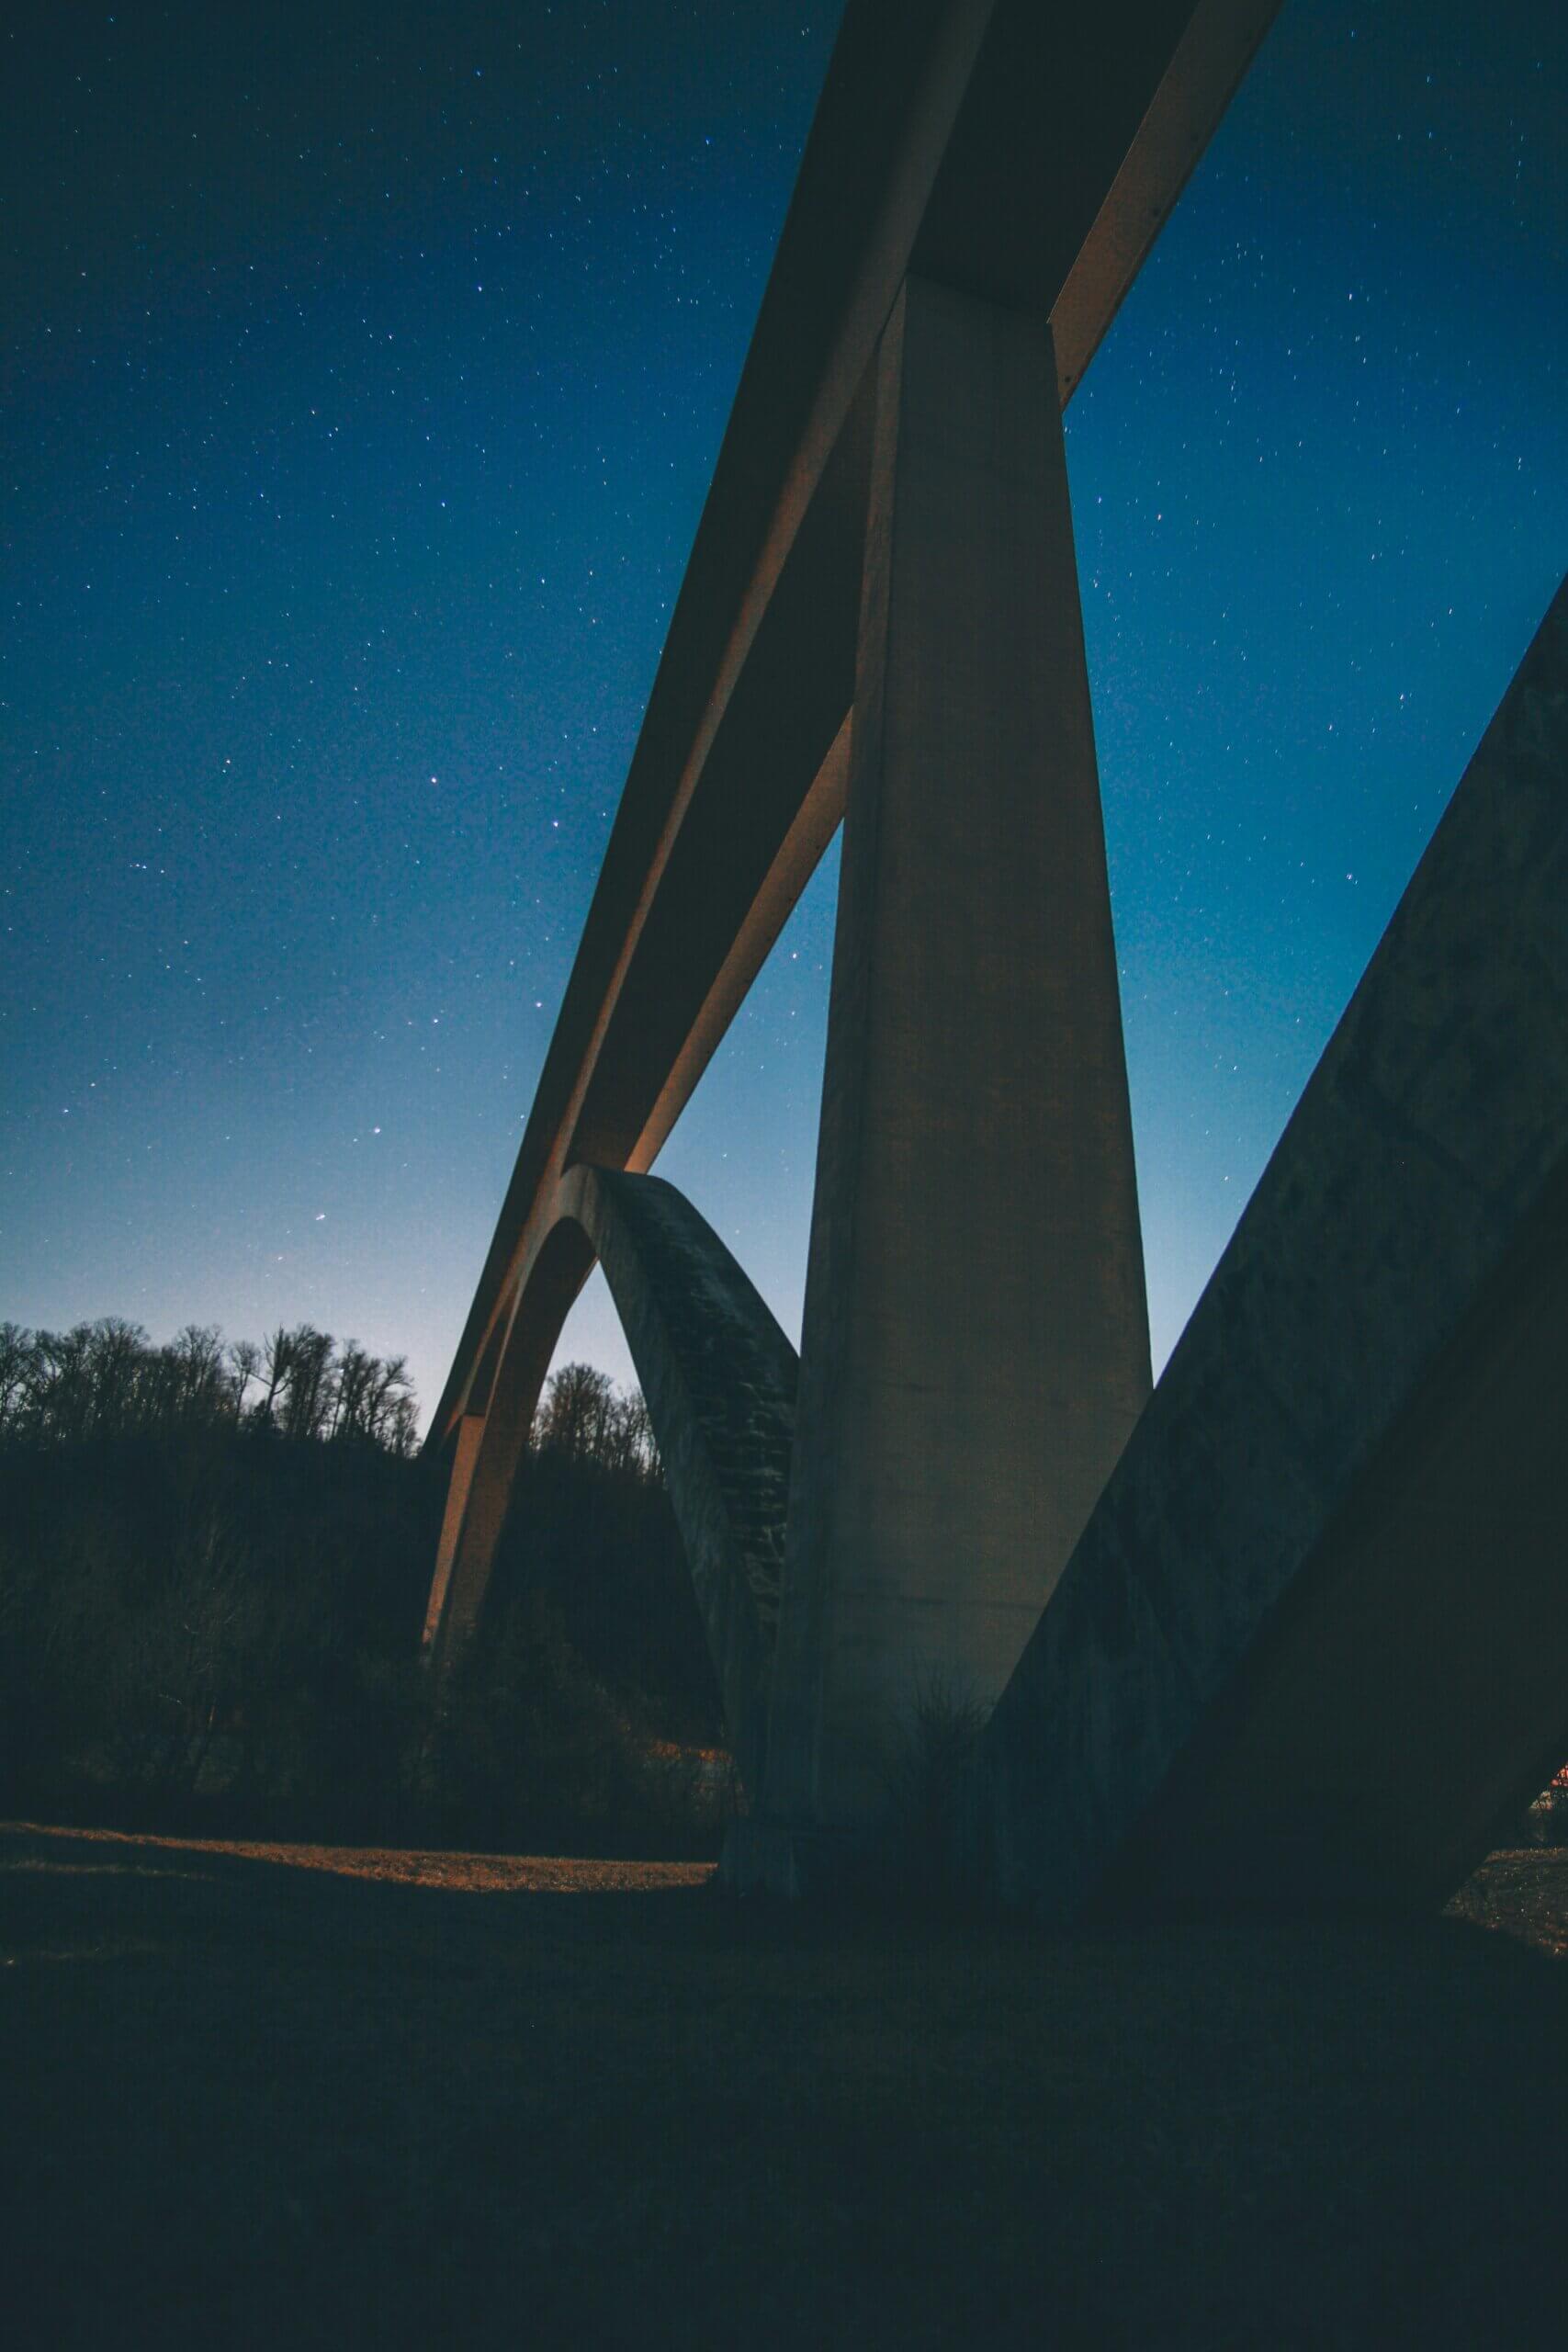 A photo of a modern bridge under a starry night sky.